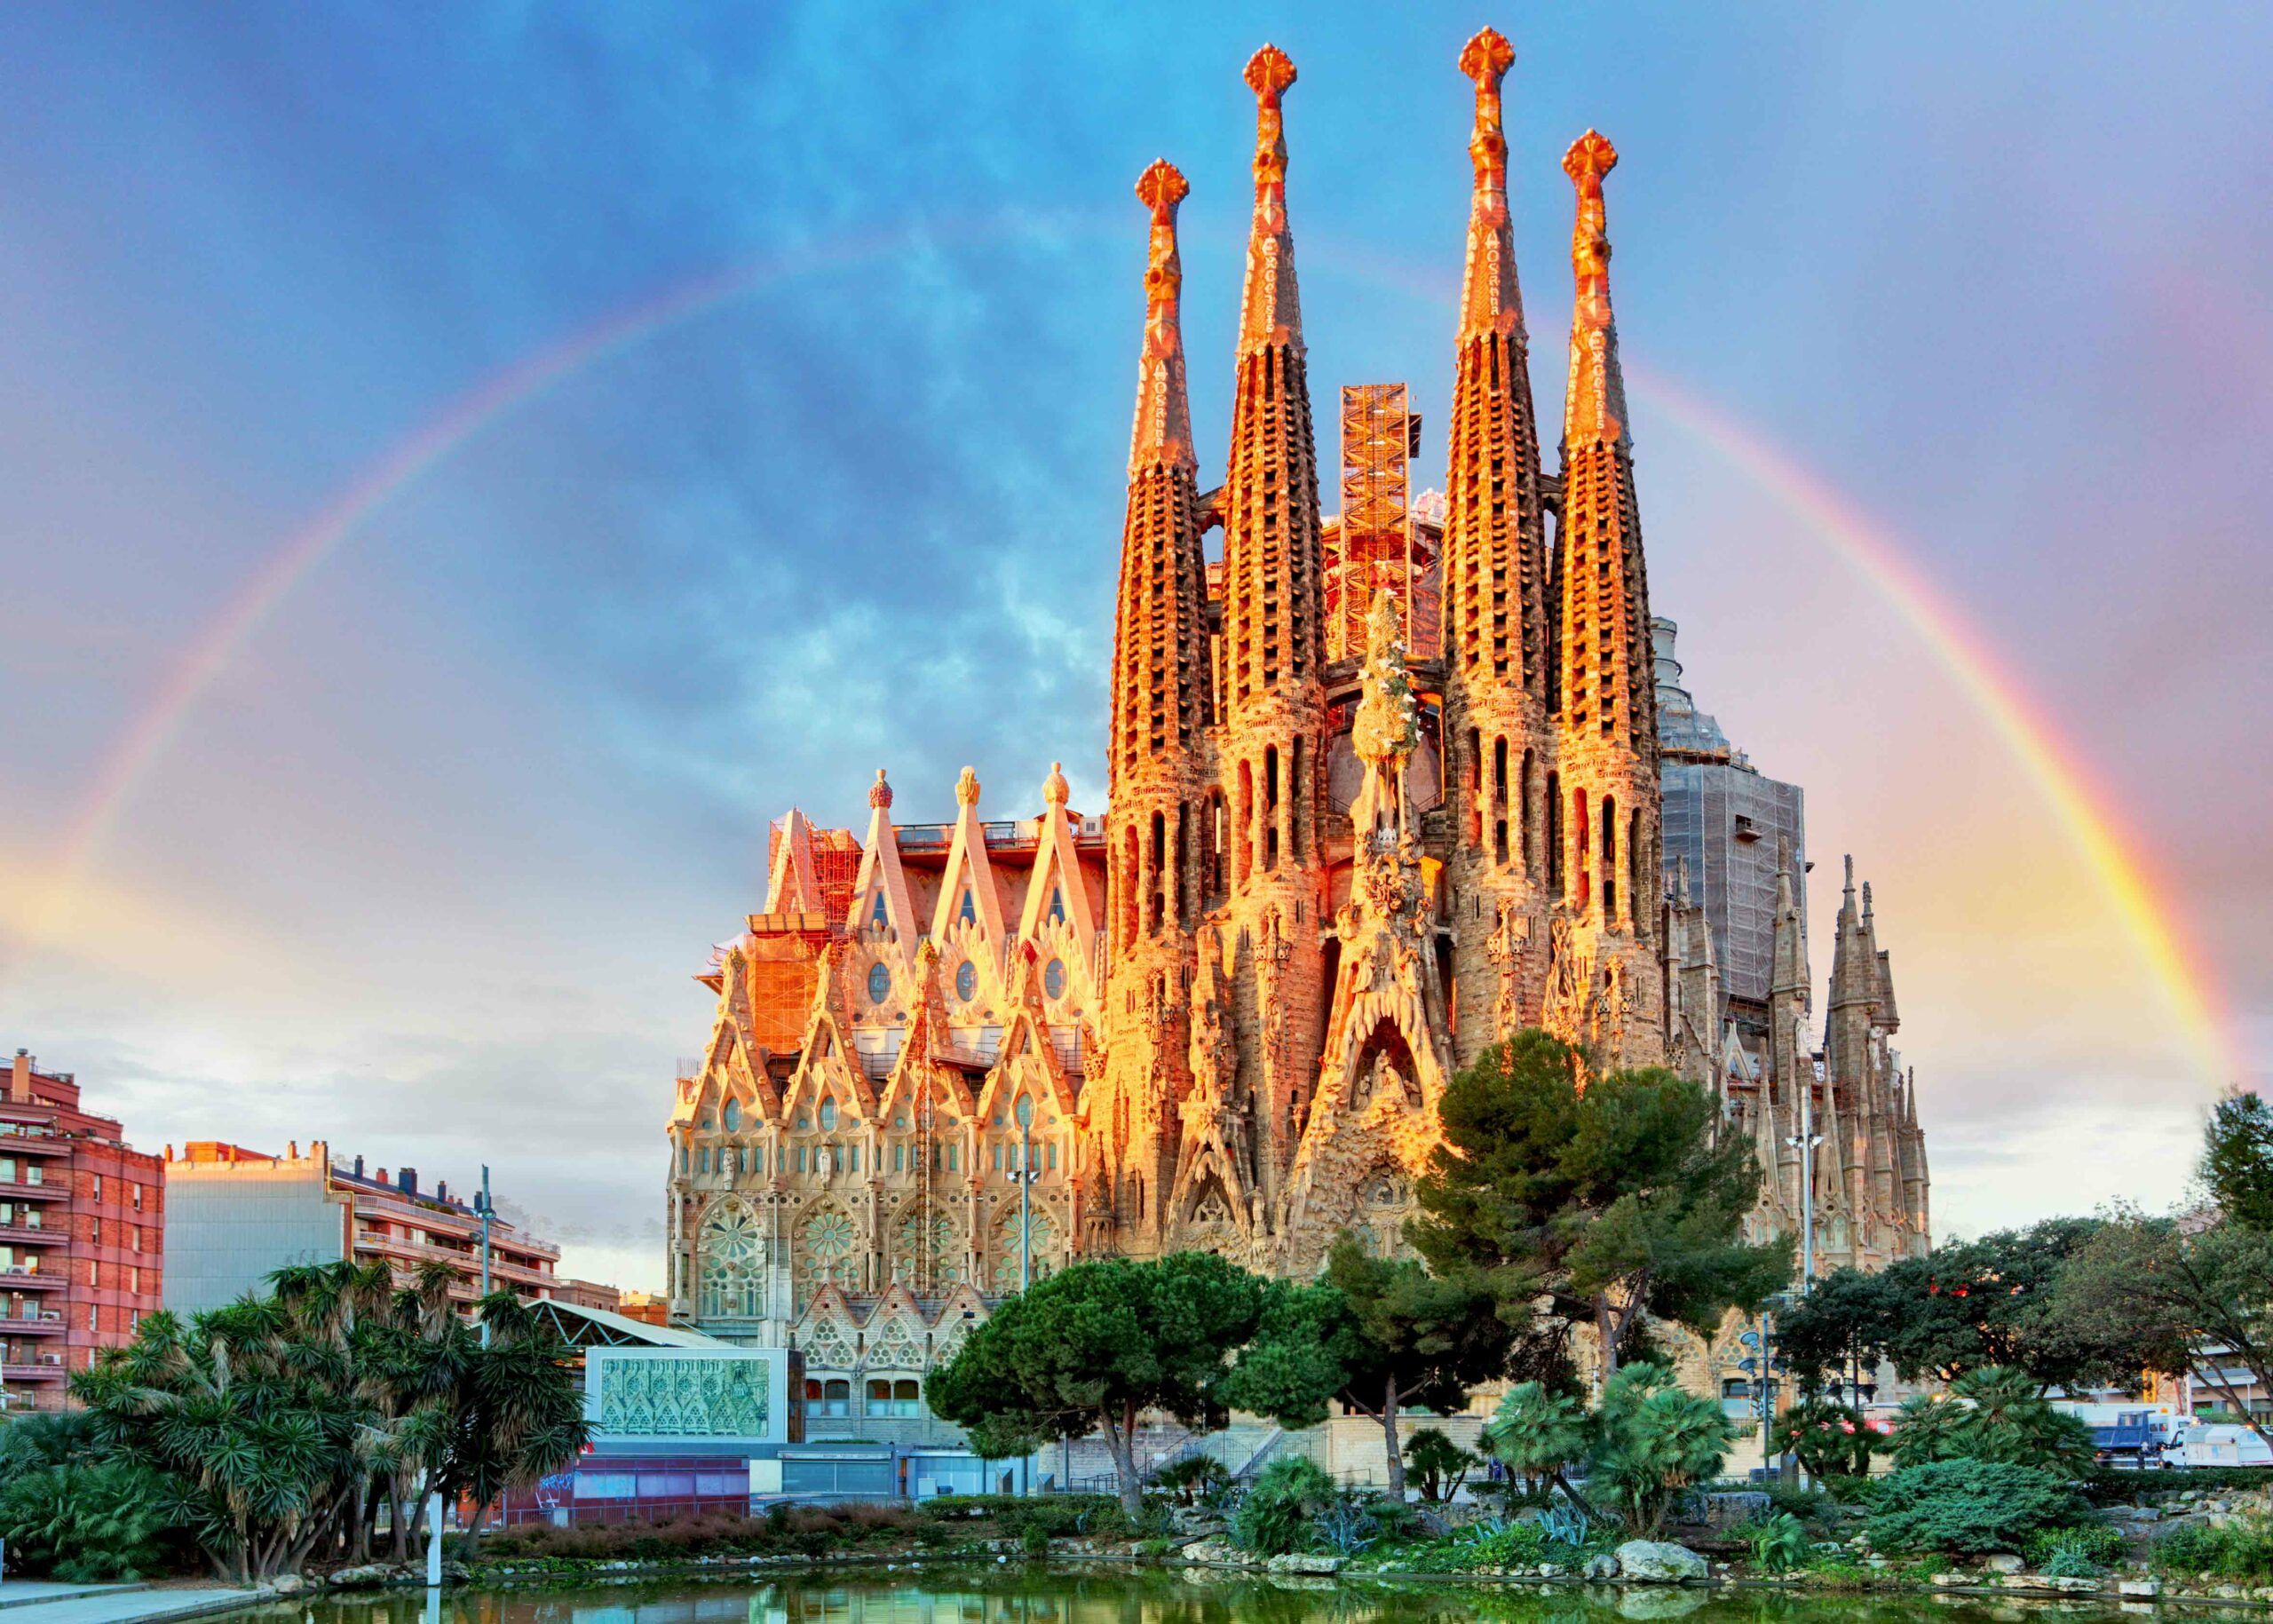 photo of the Sagrada Familia church with a rainbow over it